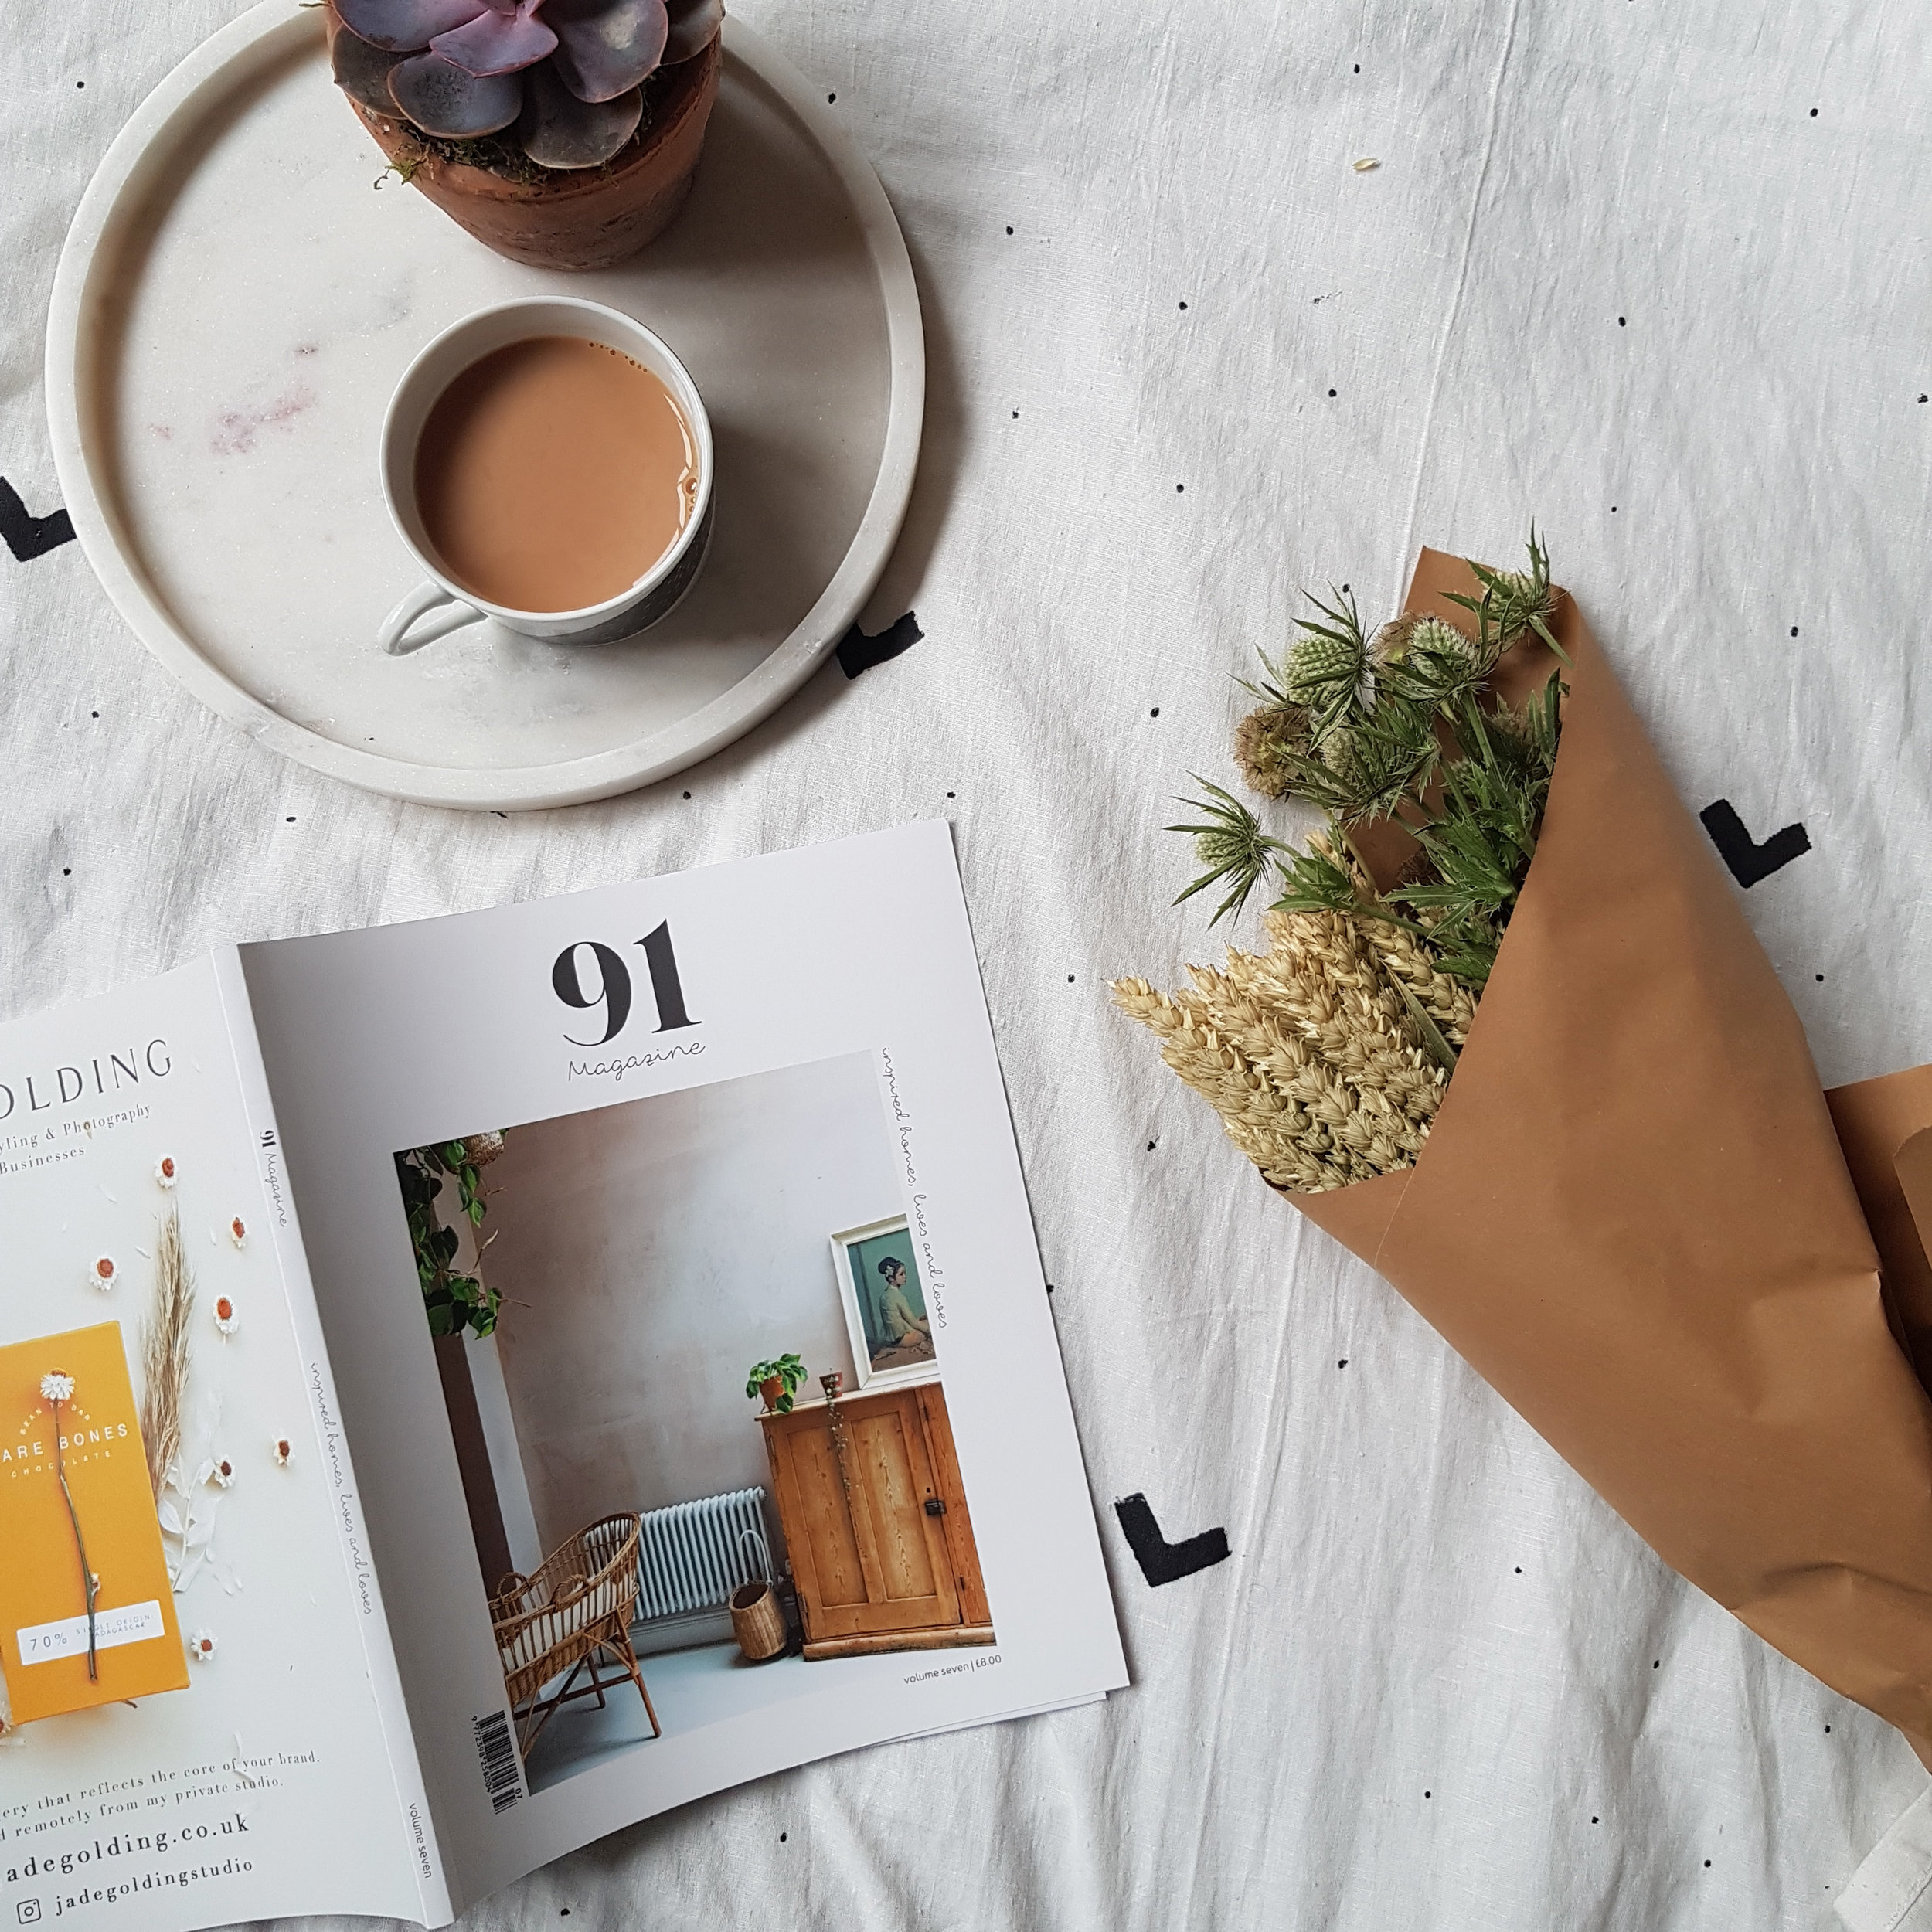 91 Magazine - indie interiors & lifestyle magazine - volume 7